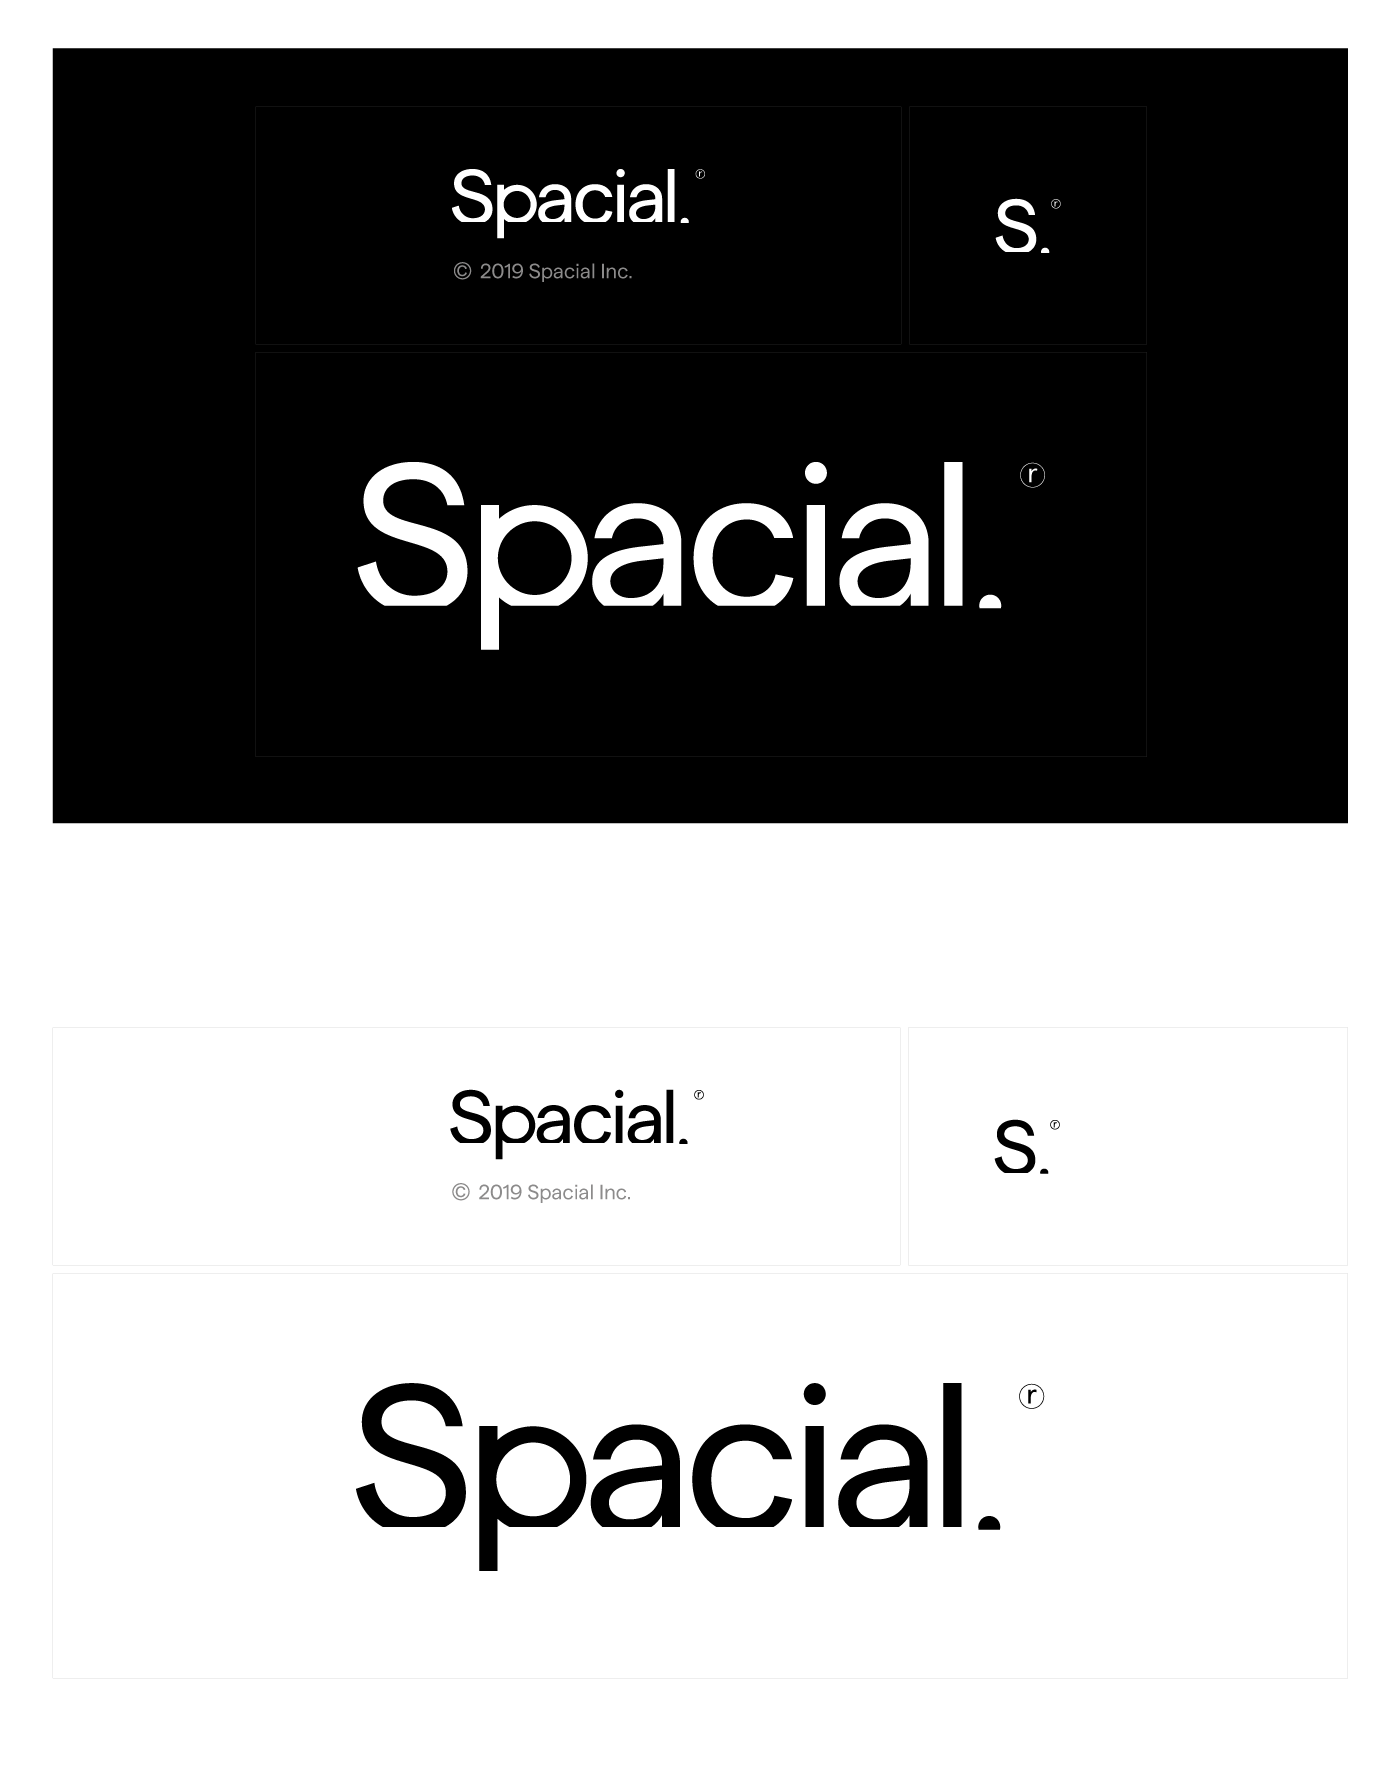 New logo for Spacial